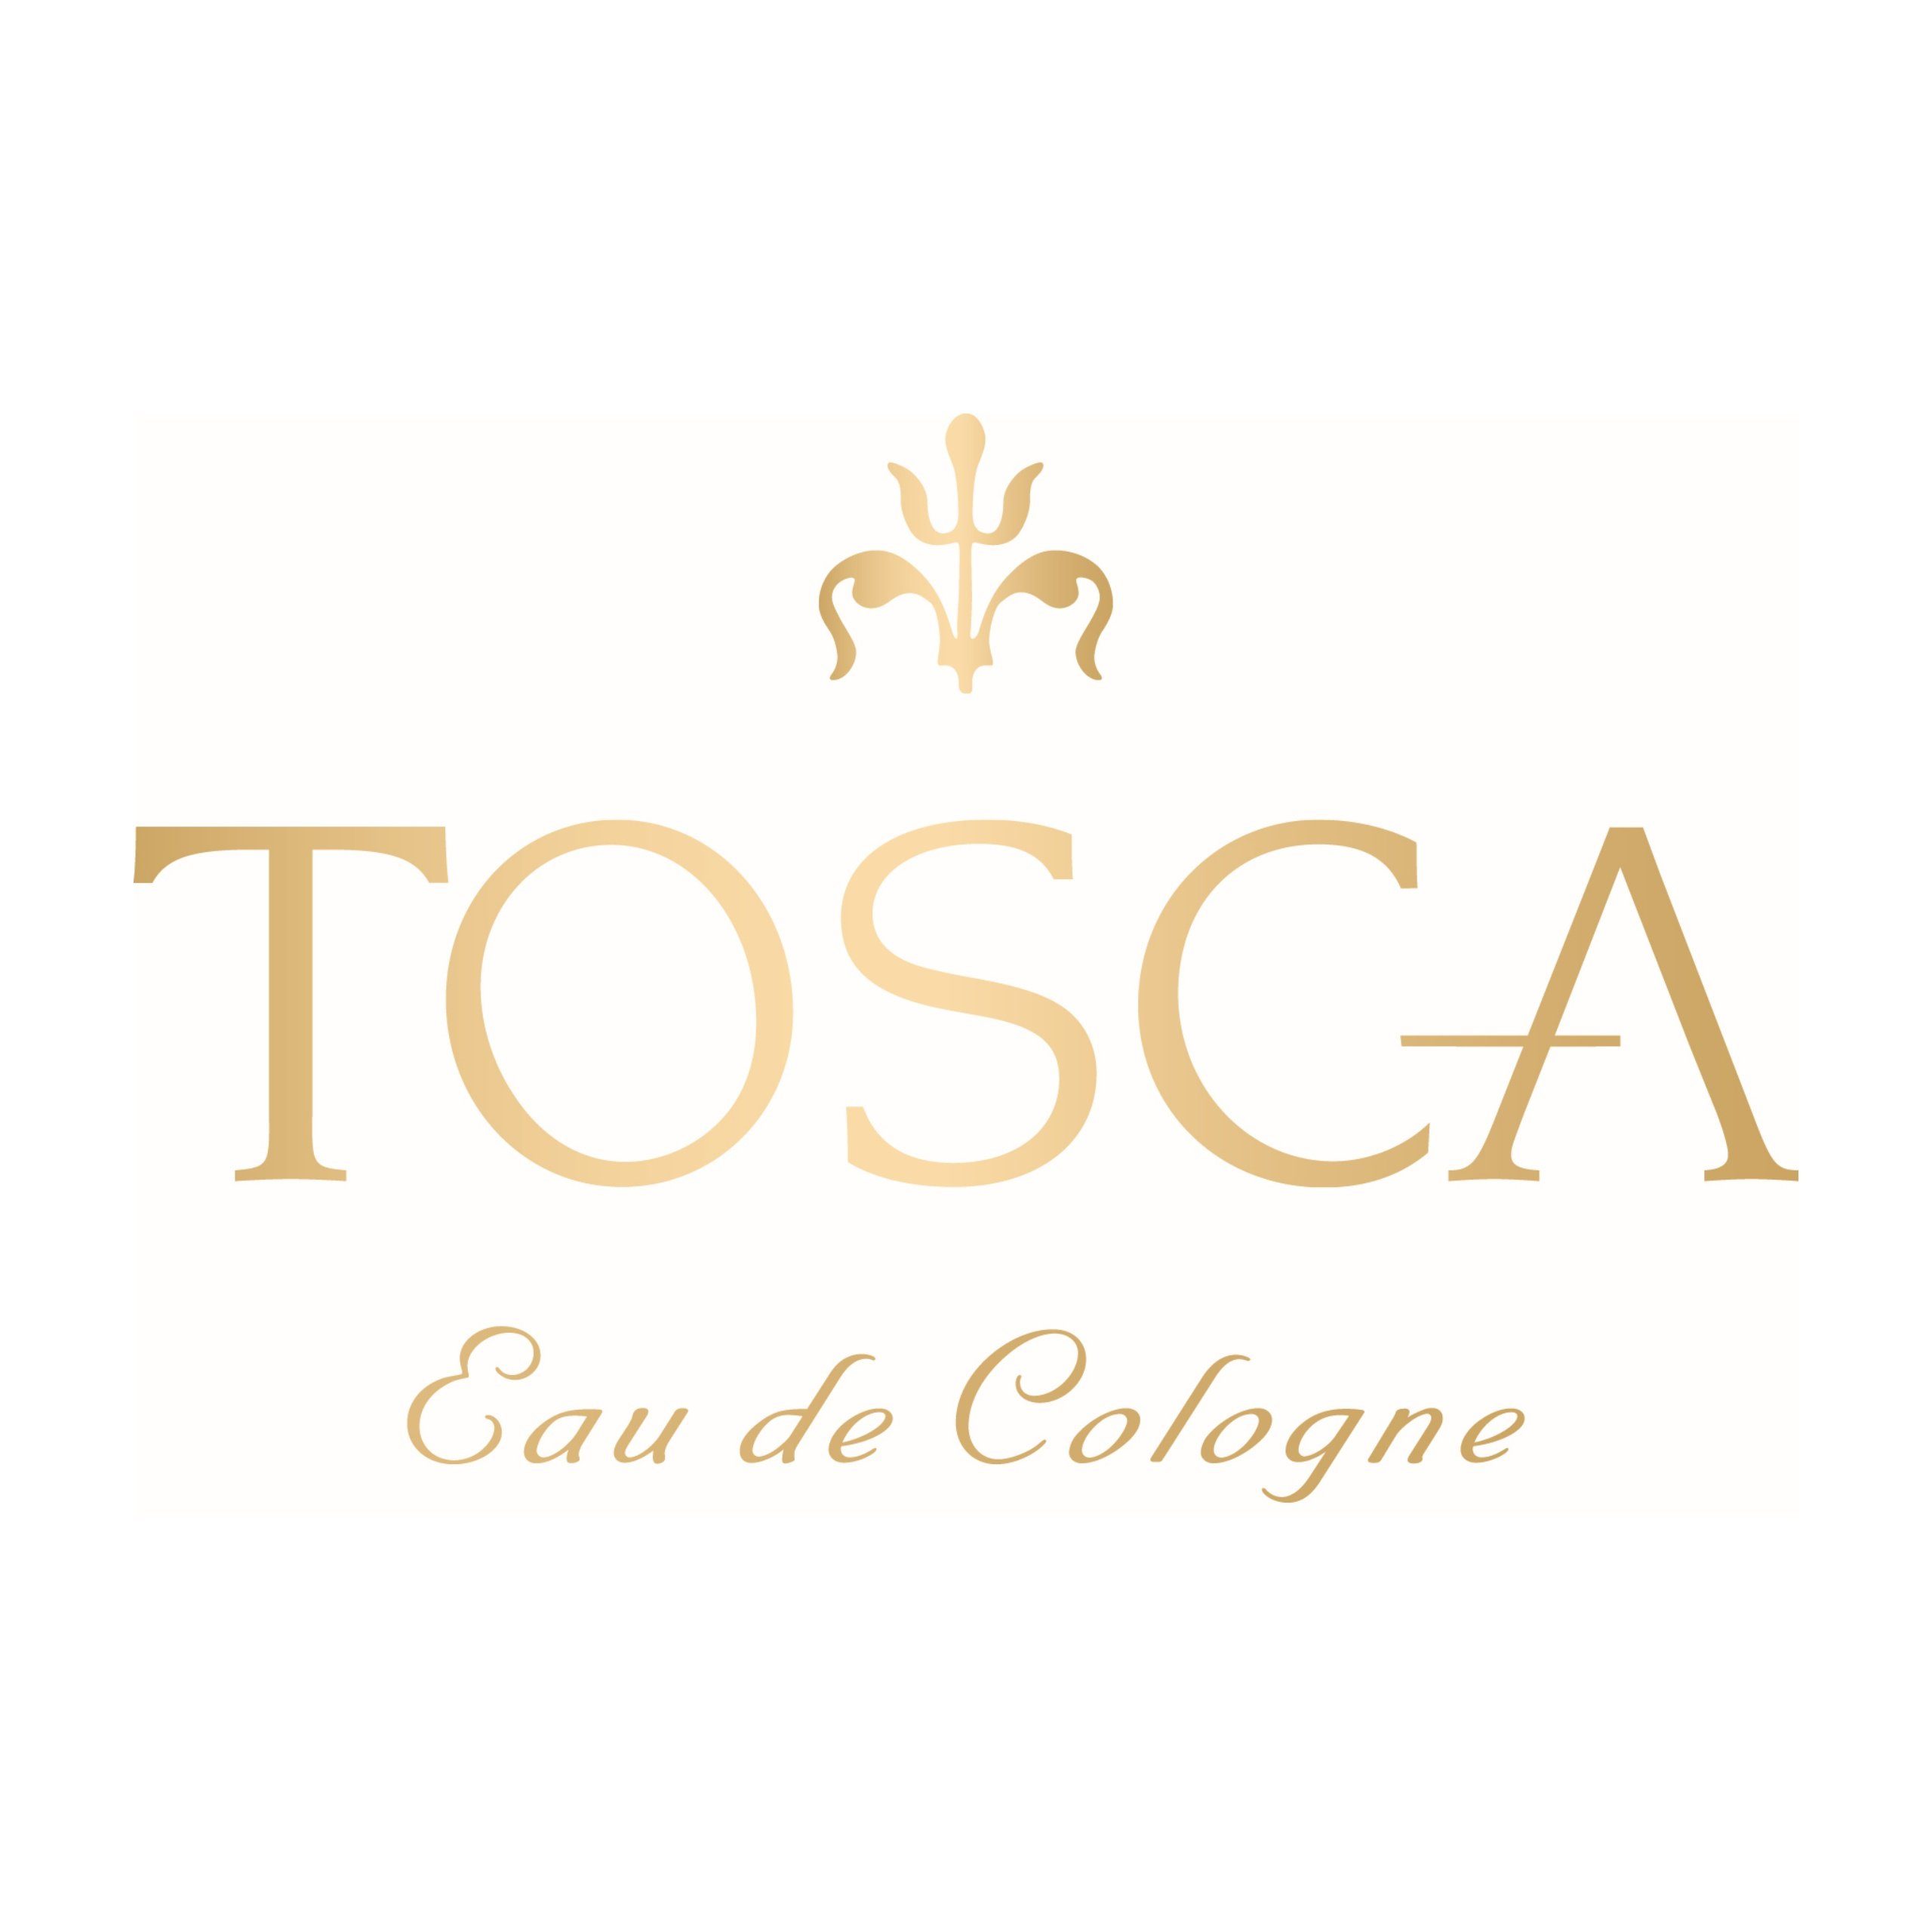 Splash Cologne Gesichts-Reinigungslotion de 50 Tosca ml Eau TOSCA